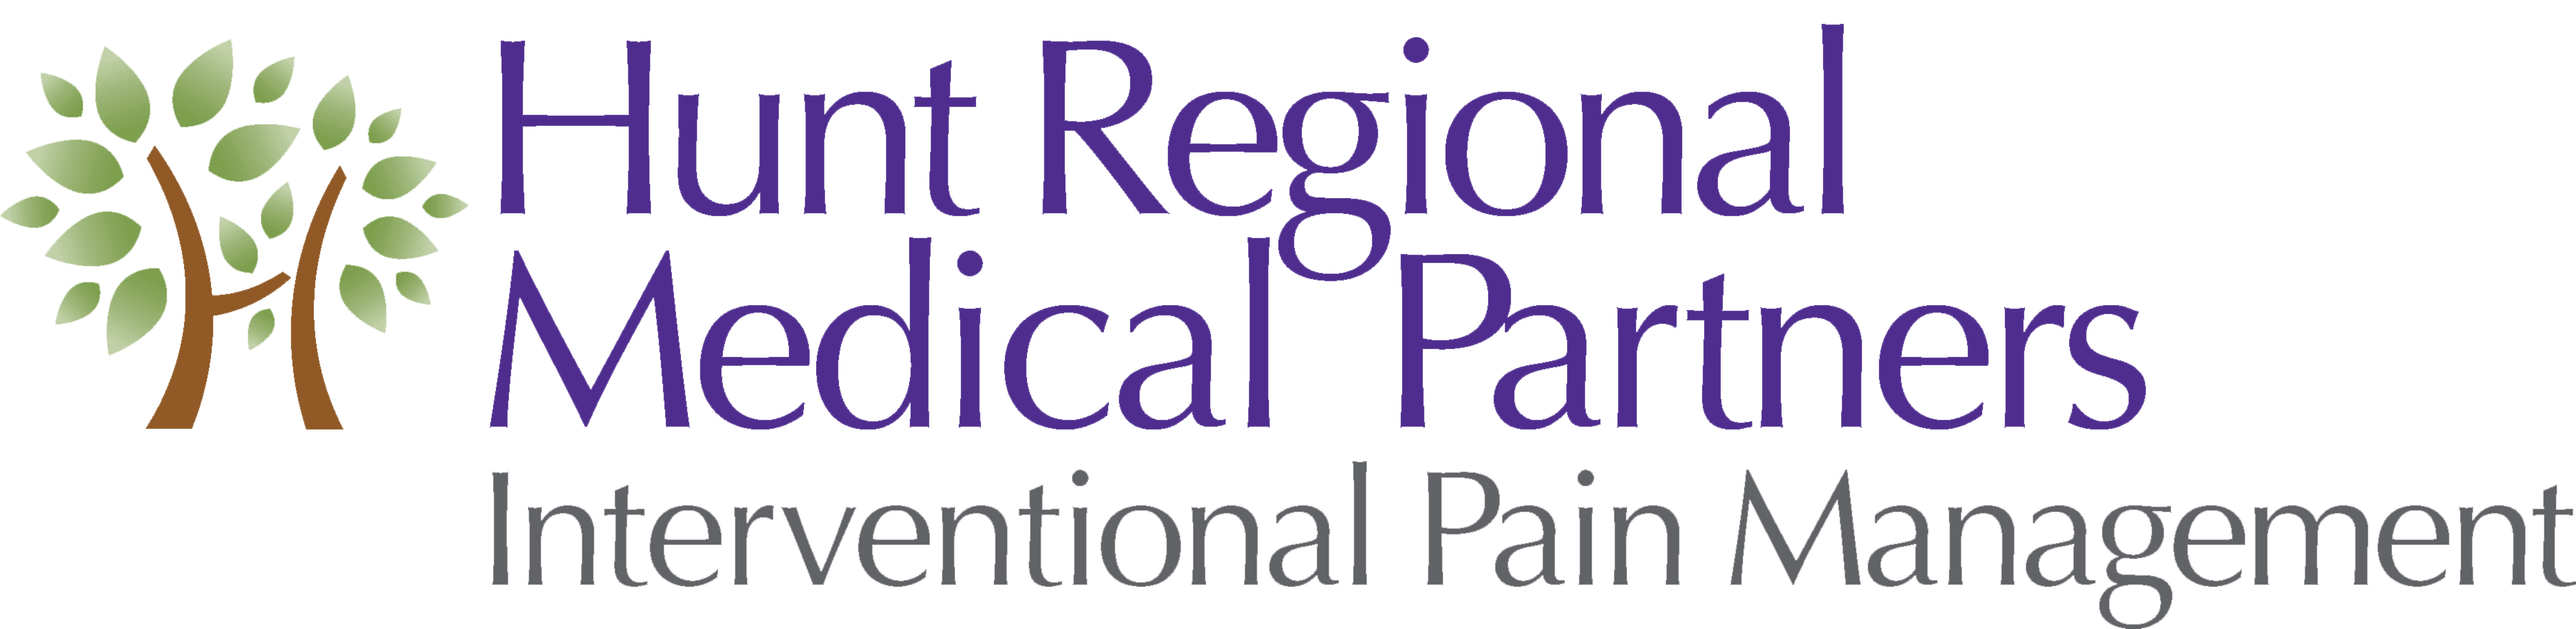 Hunt Regional Medical Partners | Interventional Pain Management